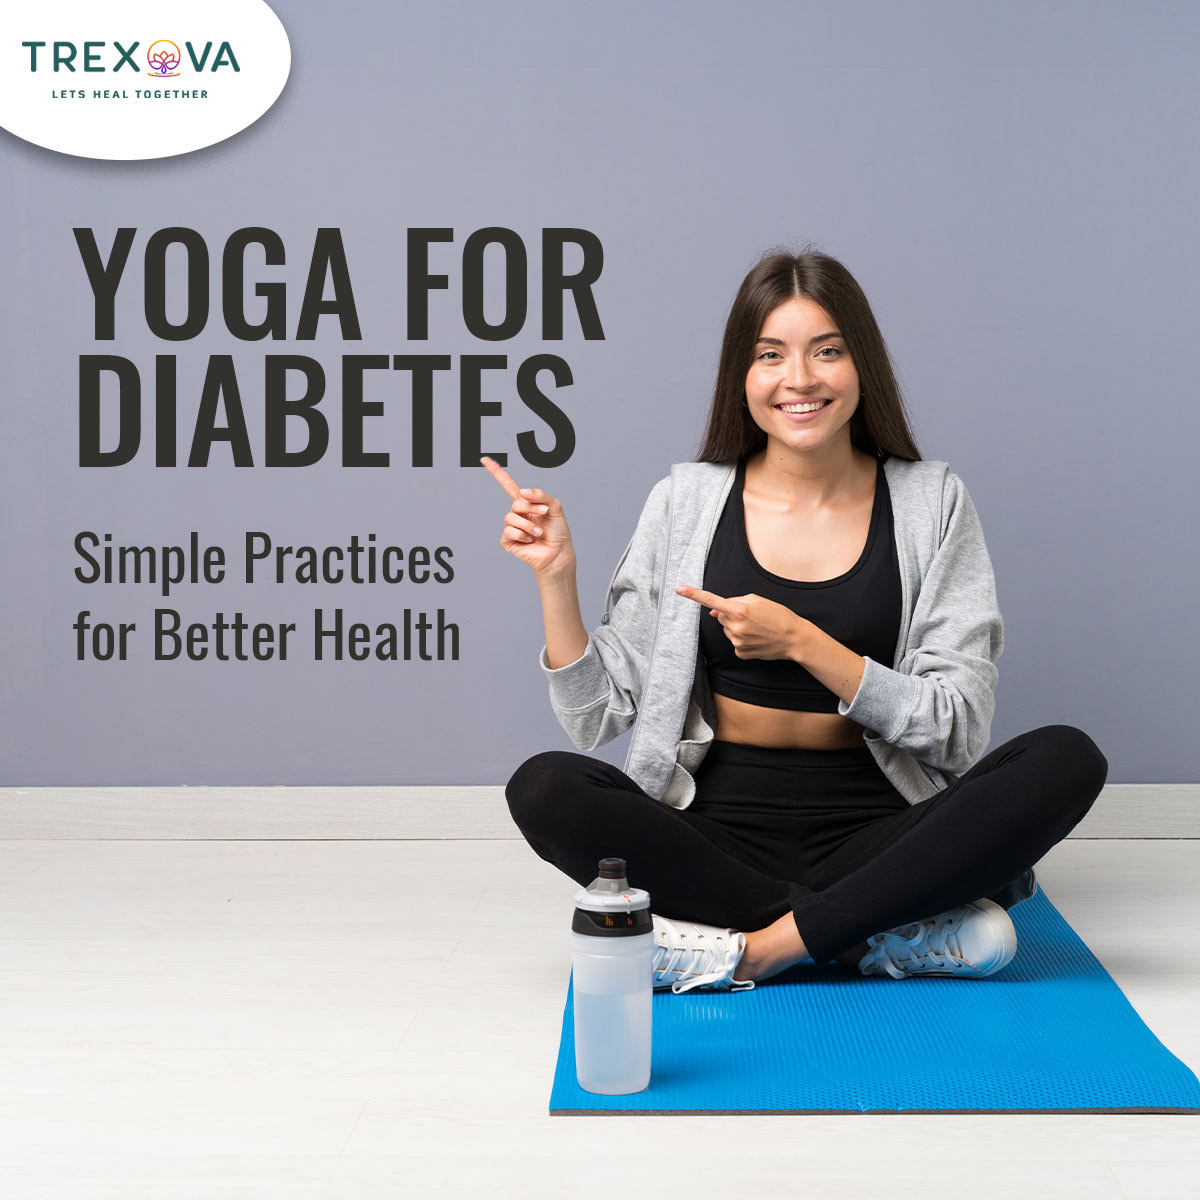 Yoga best yoga classes near me yoga for diabetes